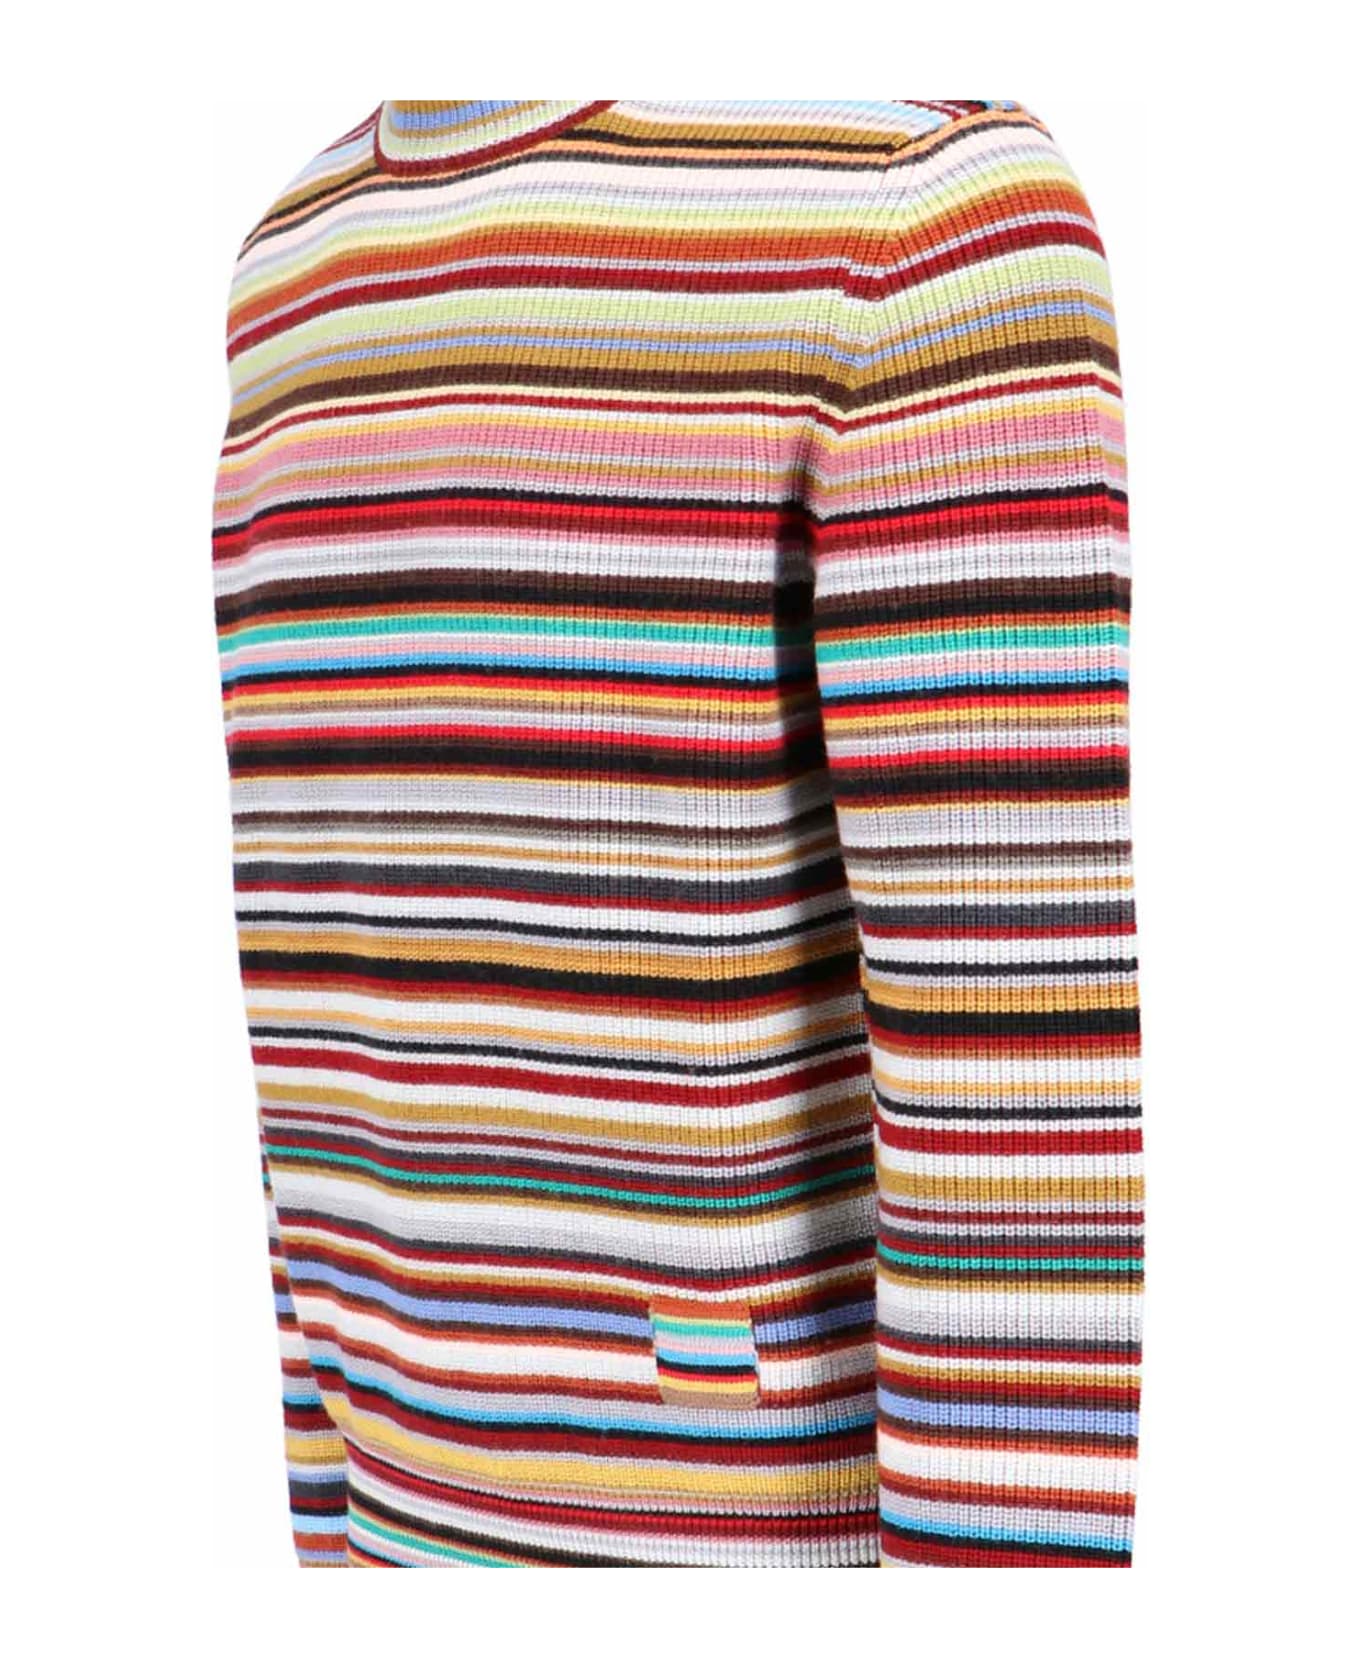 Paul Smith Striped Wool Turtleneck Sweater - Multi Coloured